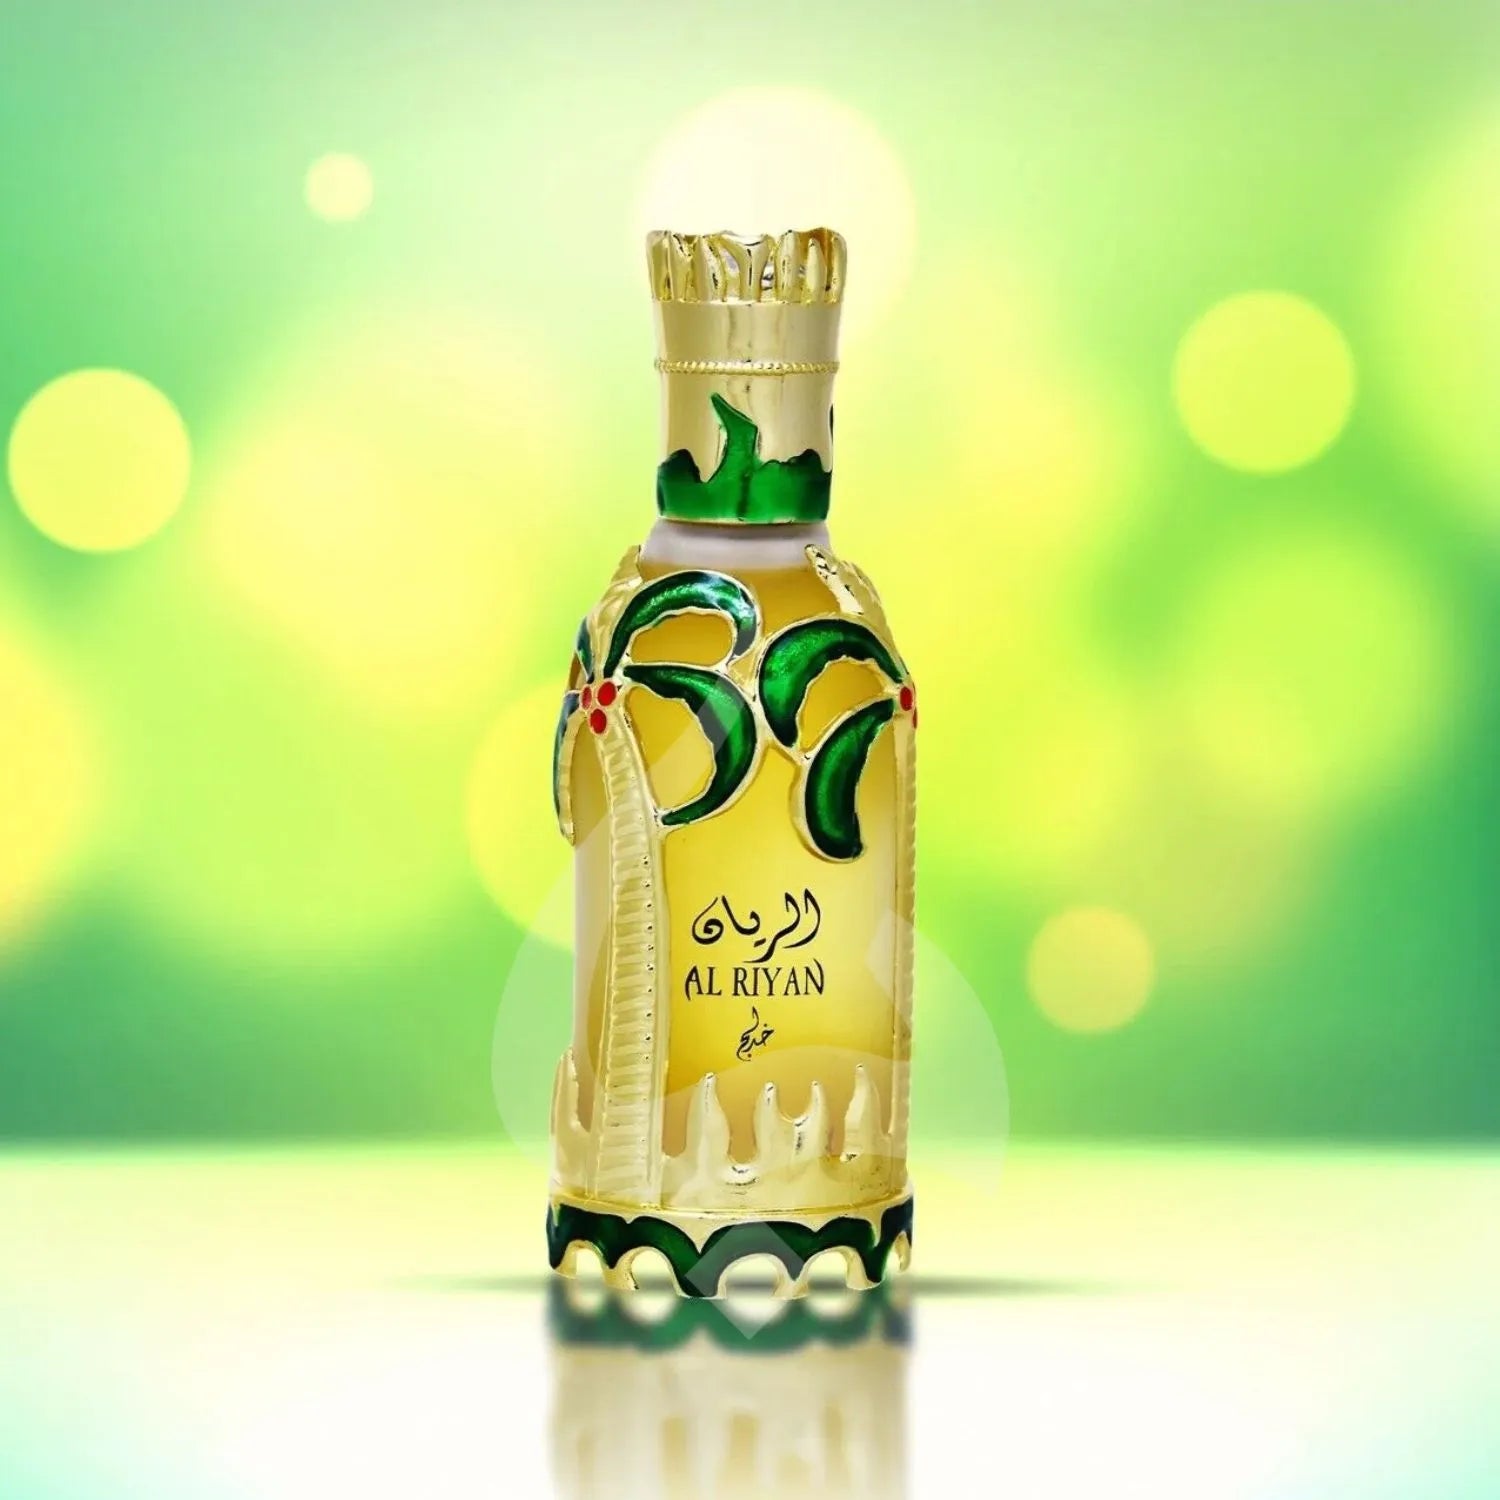 Al Riyan Perfume Oil Image